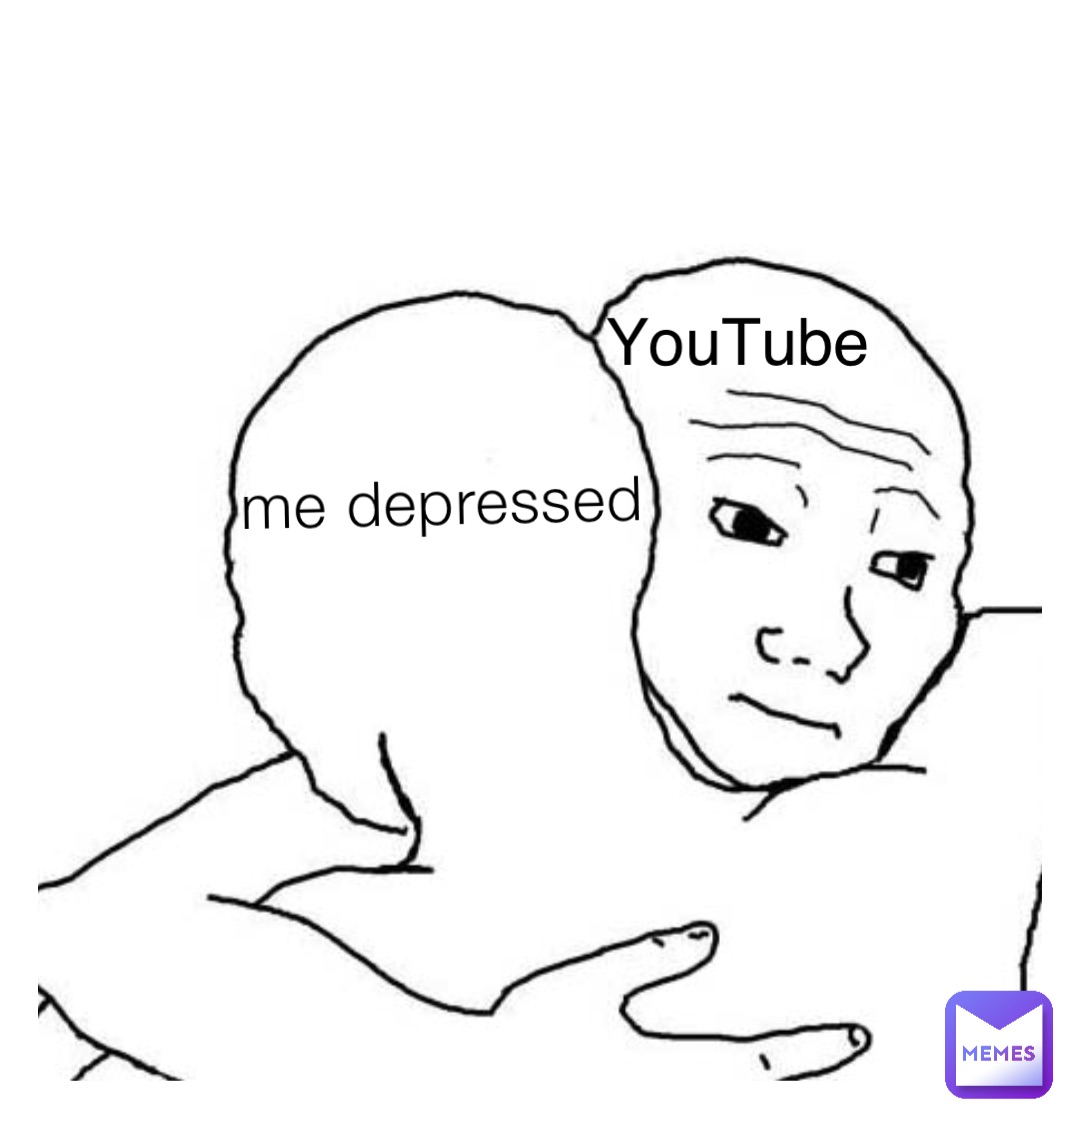 me depressed YouTube